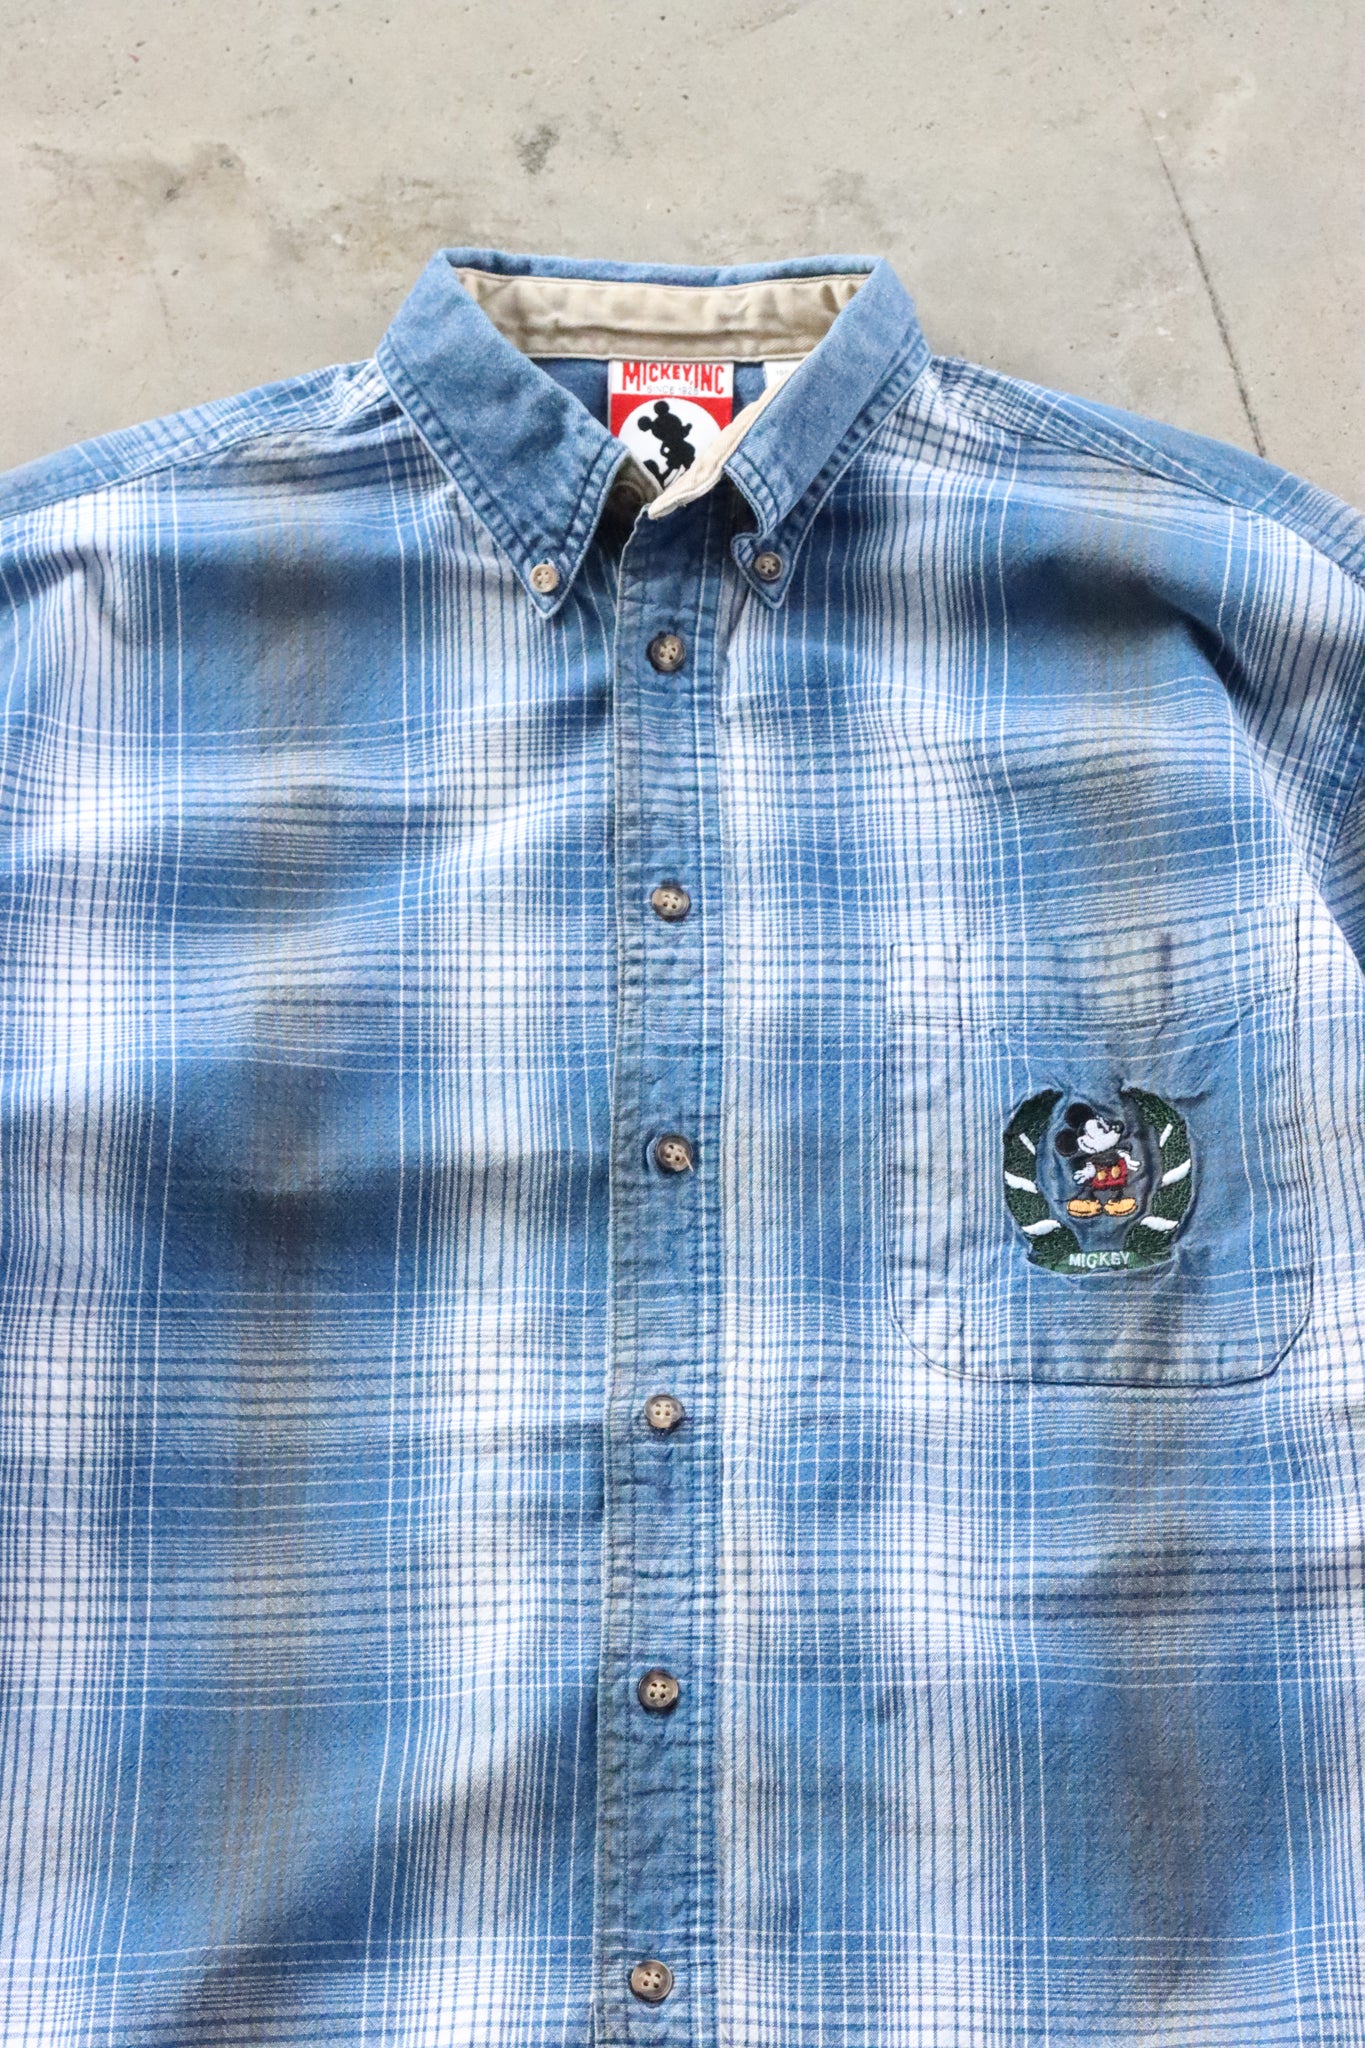 Vintage Mickey Embroidered Shirt Medium